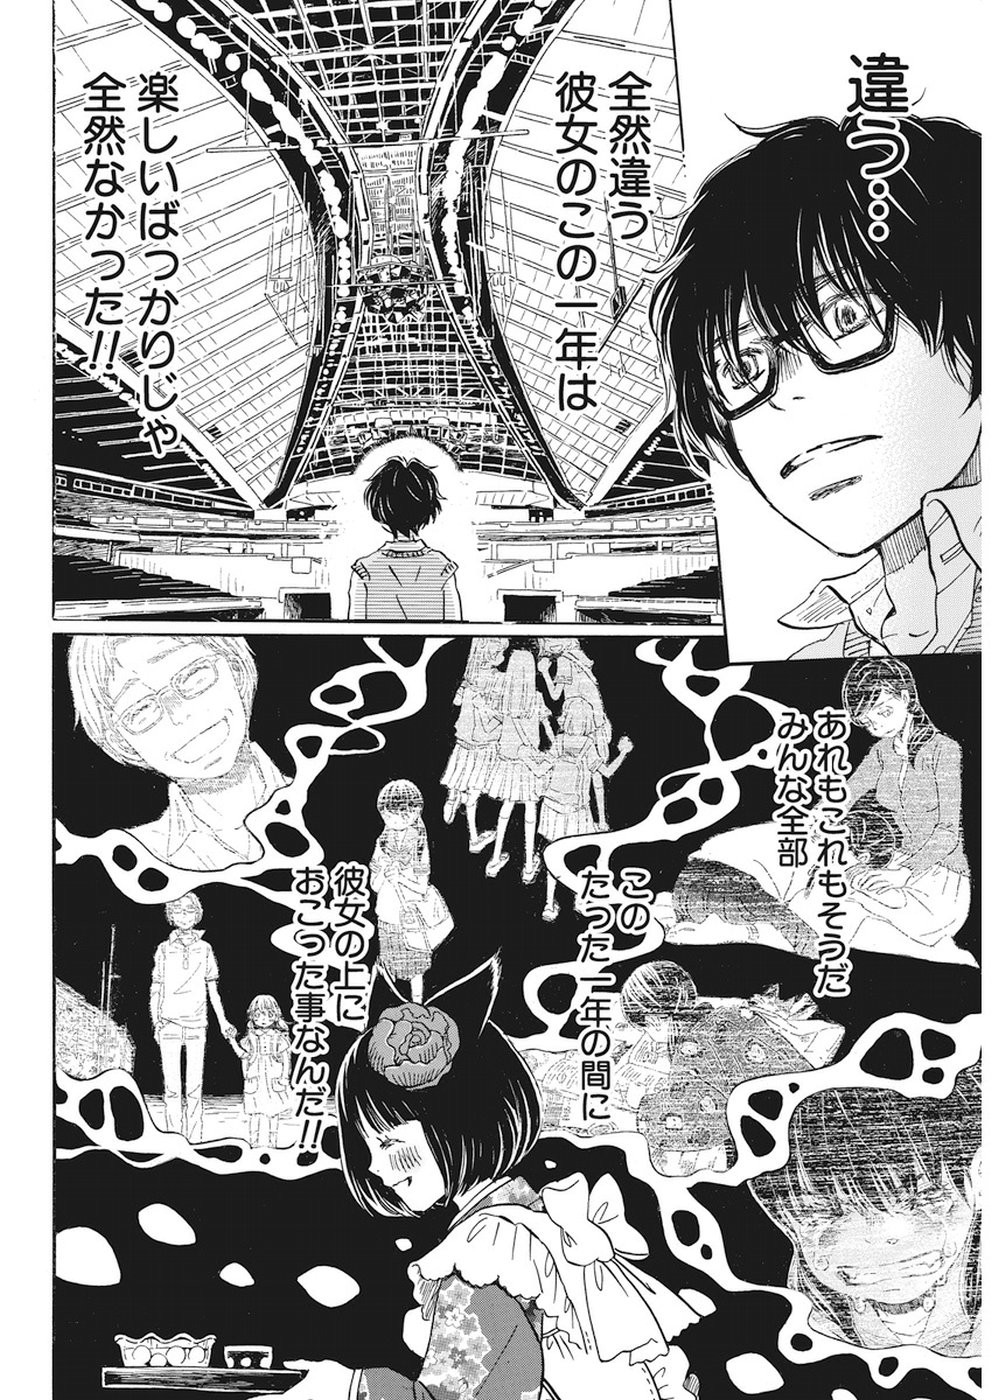 3 Gatsu no Lion - Chapter 153 - Page 2